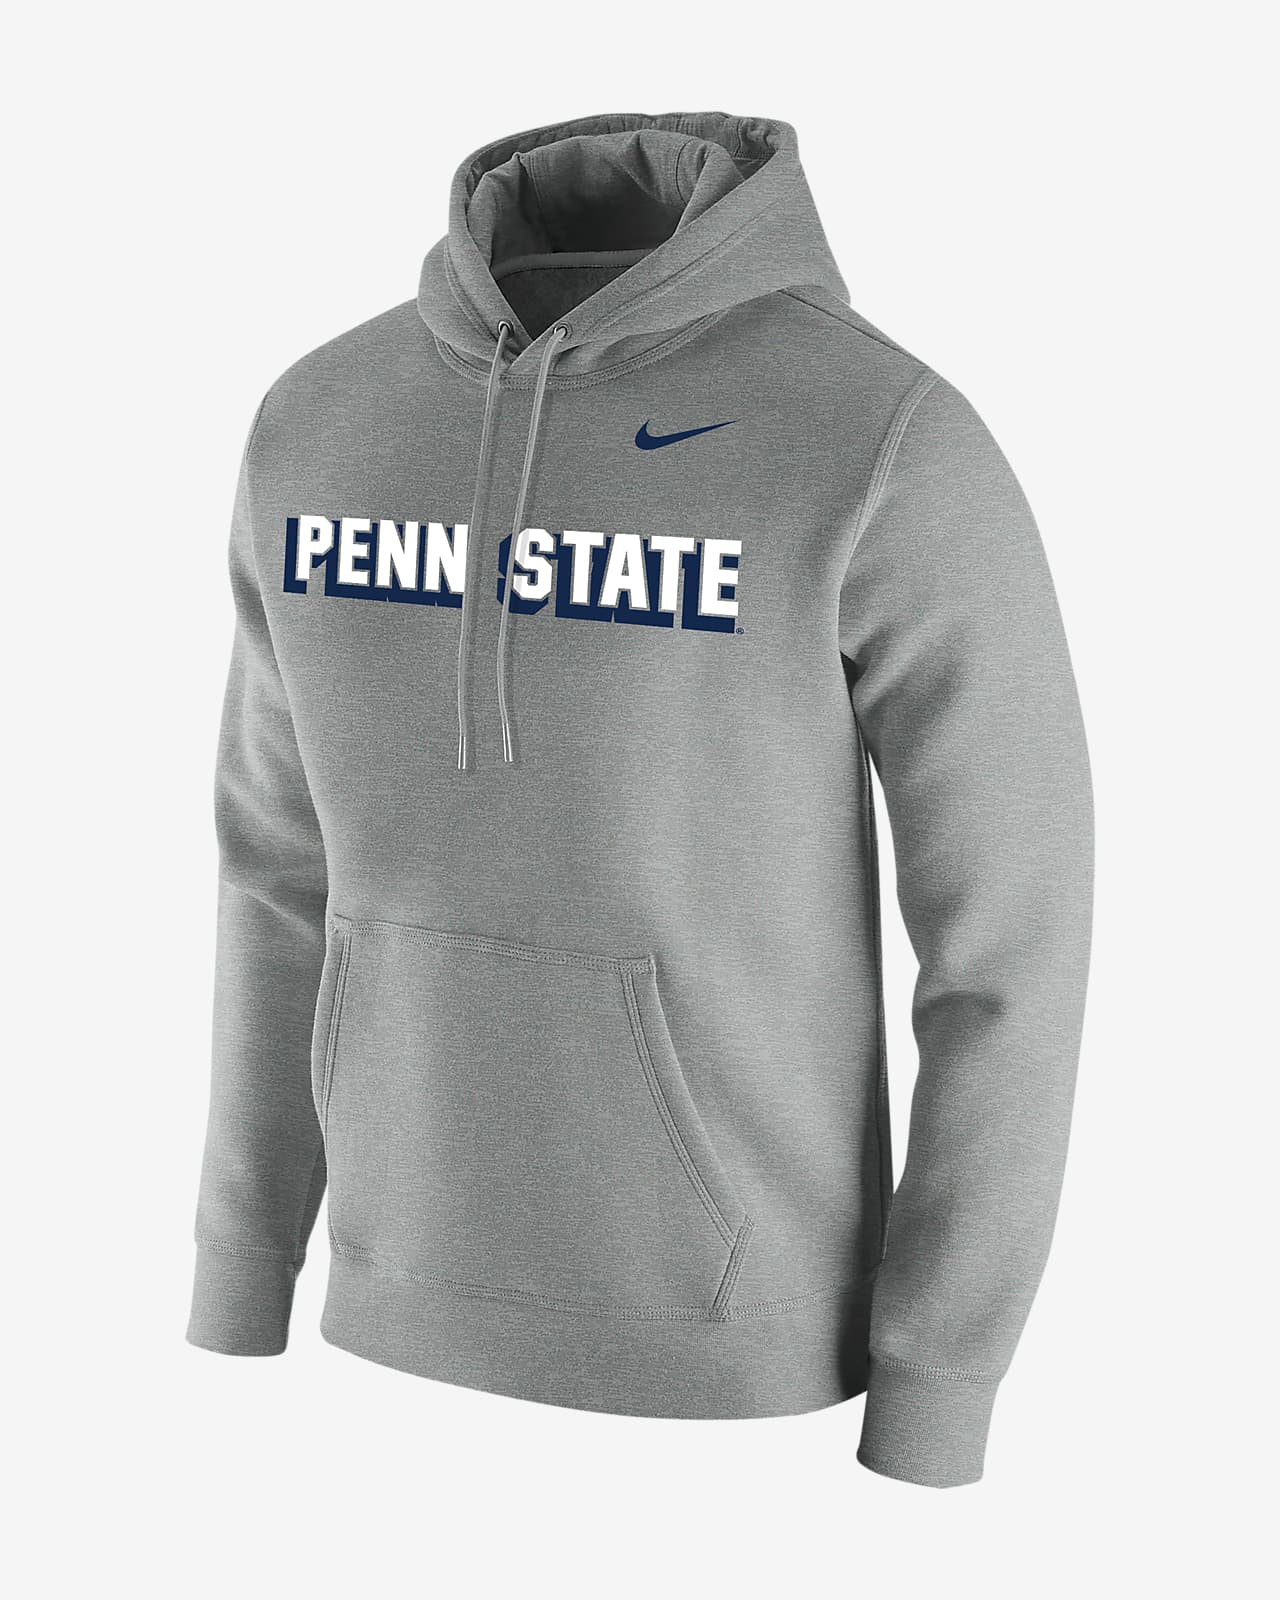 penn state white nike hoodie